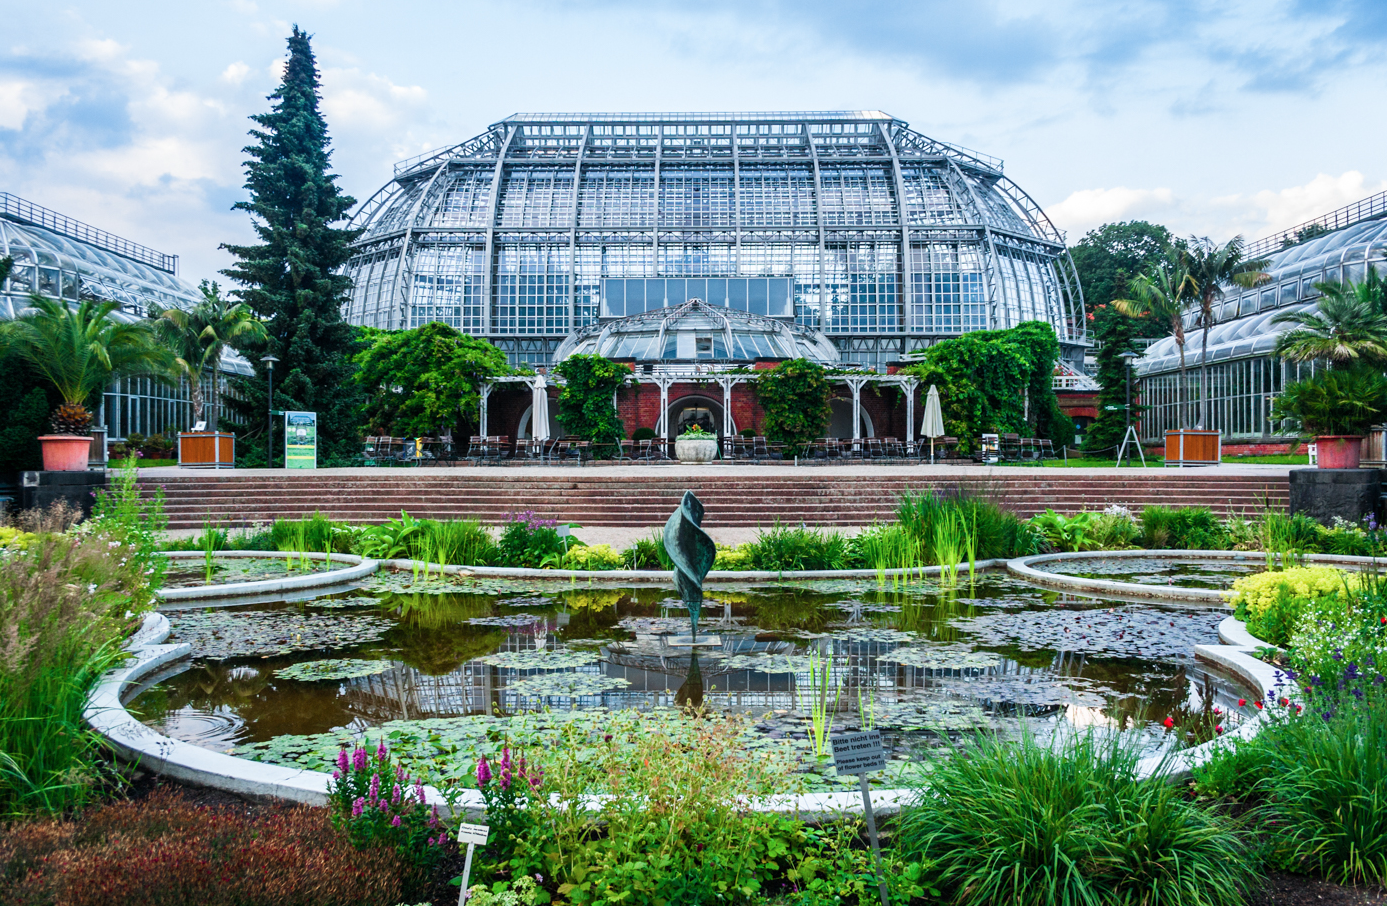 The Berlin-Dahlem Botanical Garden and Botanical Museum